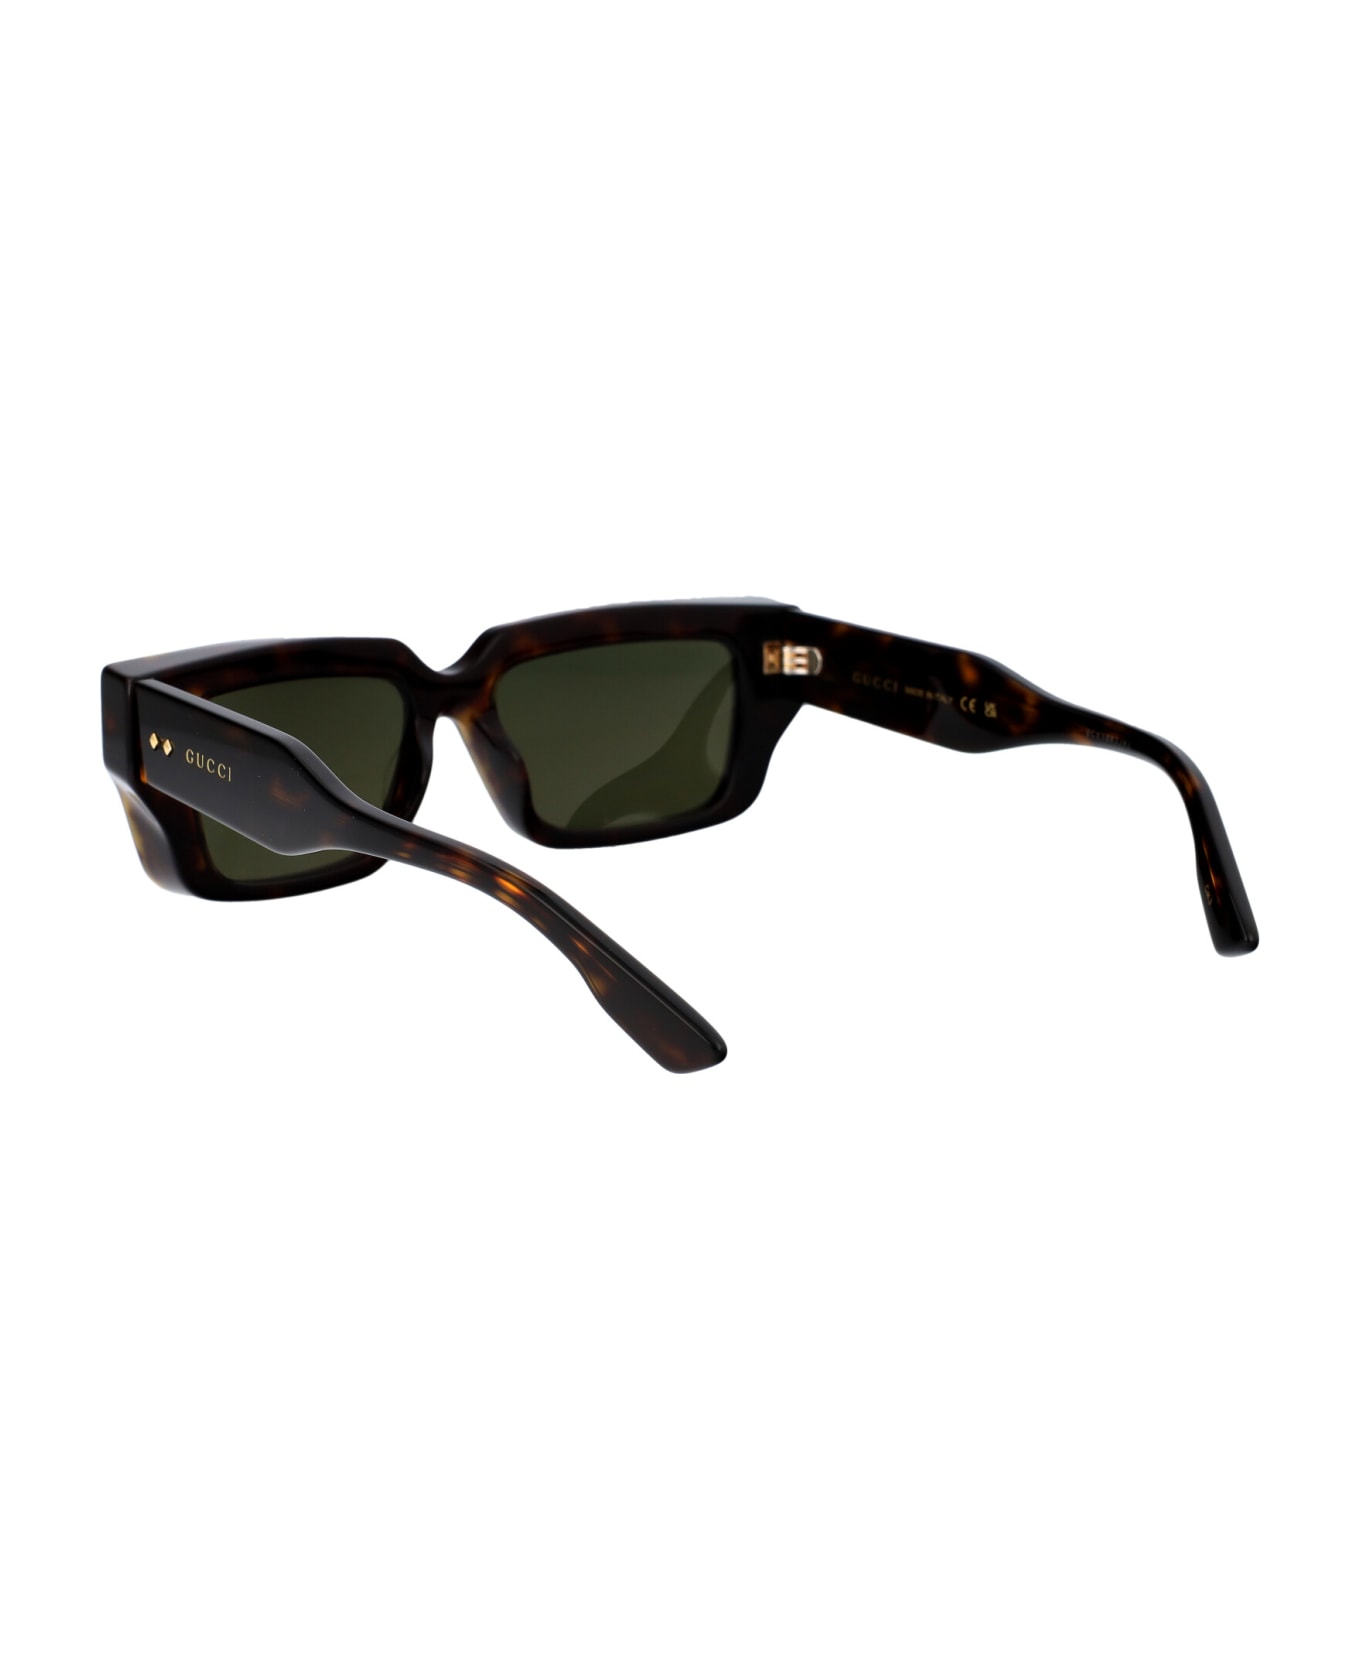 Gucci Eyewear Gg1529s Sunglasses - 002 HAVANA HAVANA GREEN